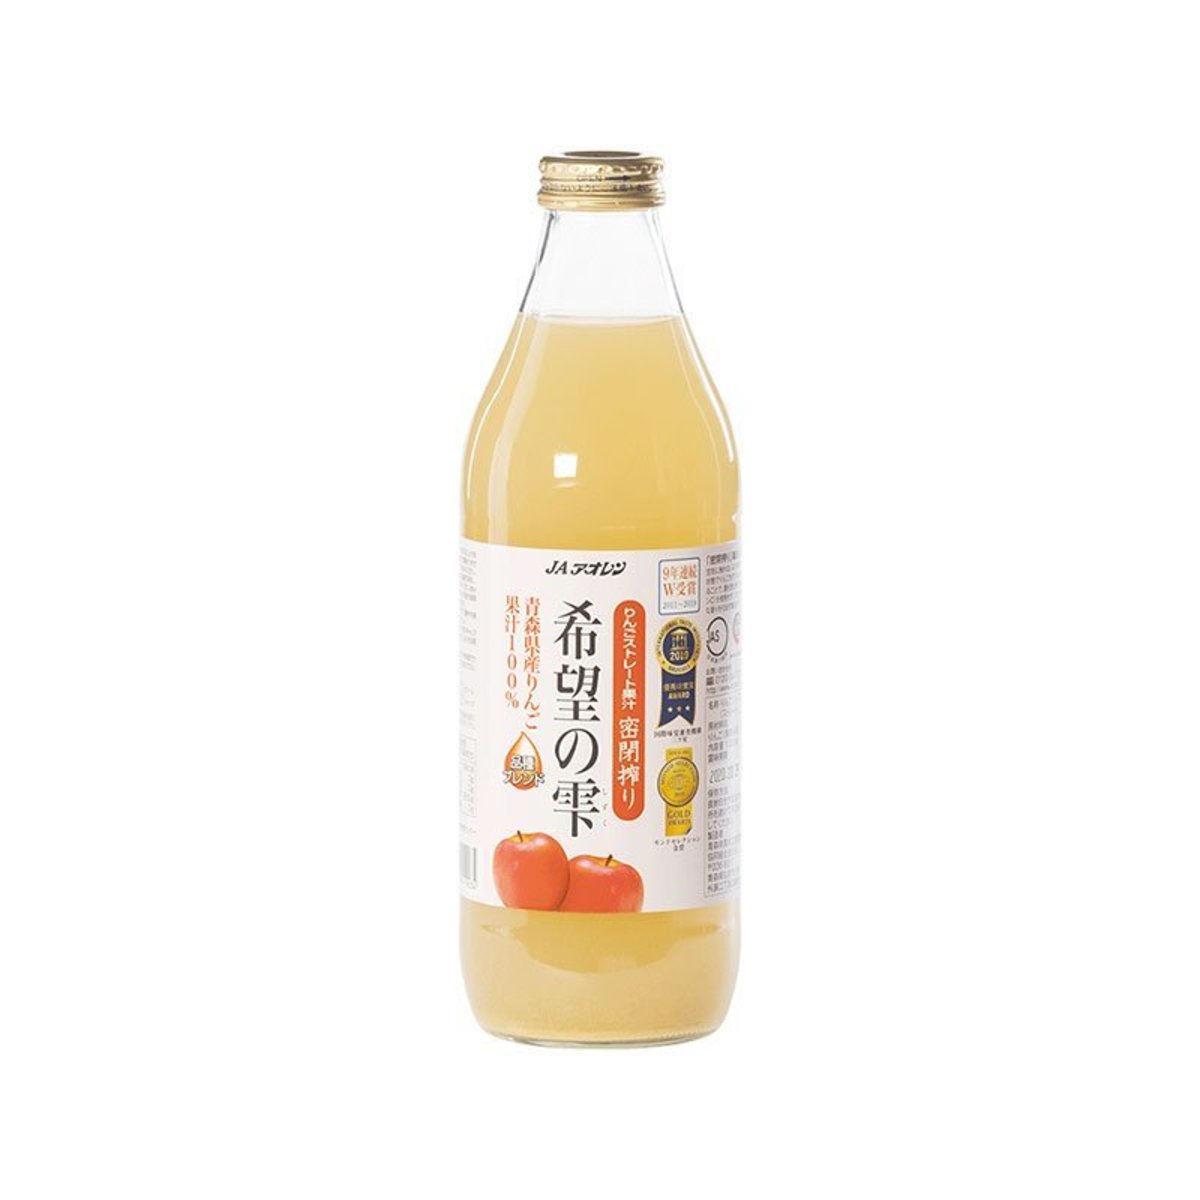 Aomori Prefecture Specialty Hope No Shizuku 100% Apple Juice 1000ml (Best Before:2 Oct 2024)